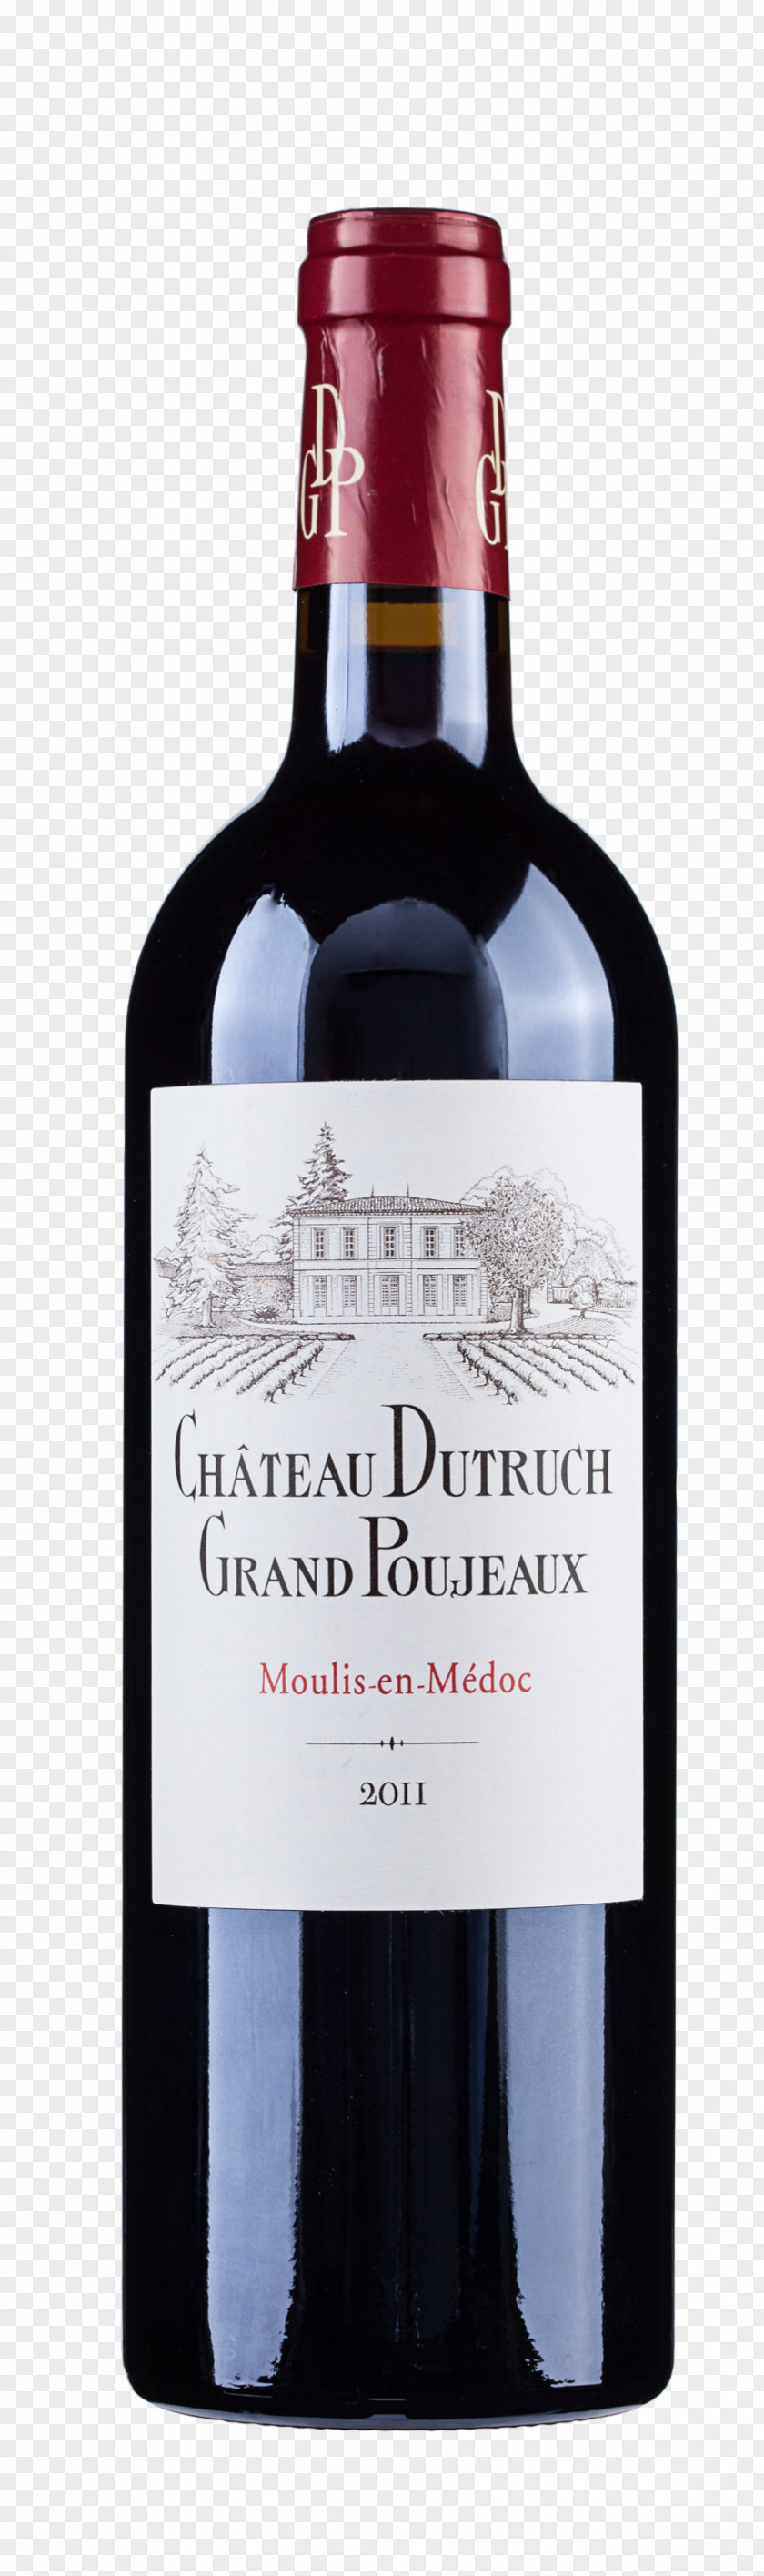 Wine Red Grand Poujeaux Winery Cru PNG